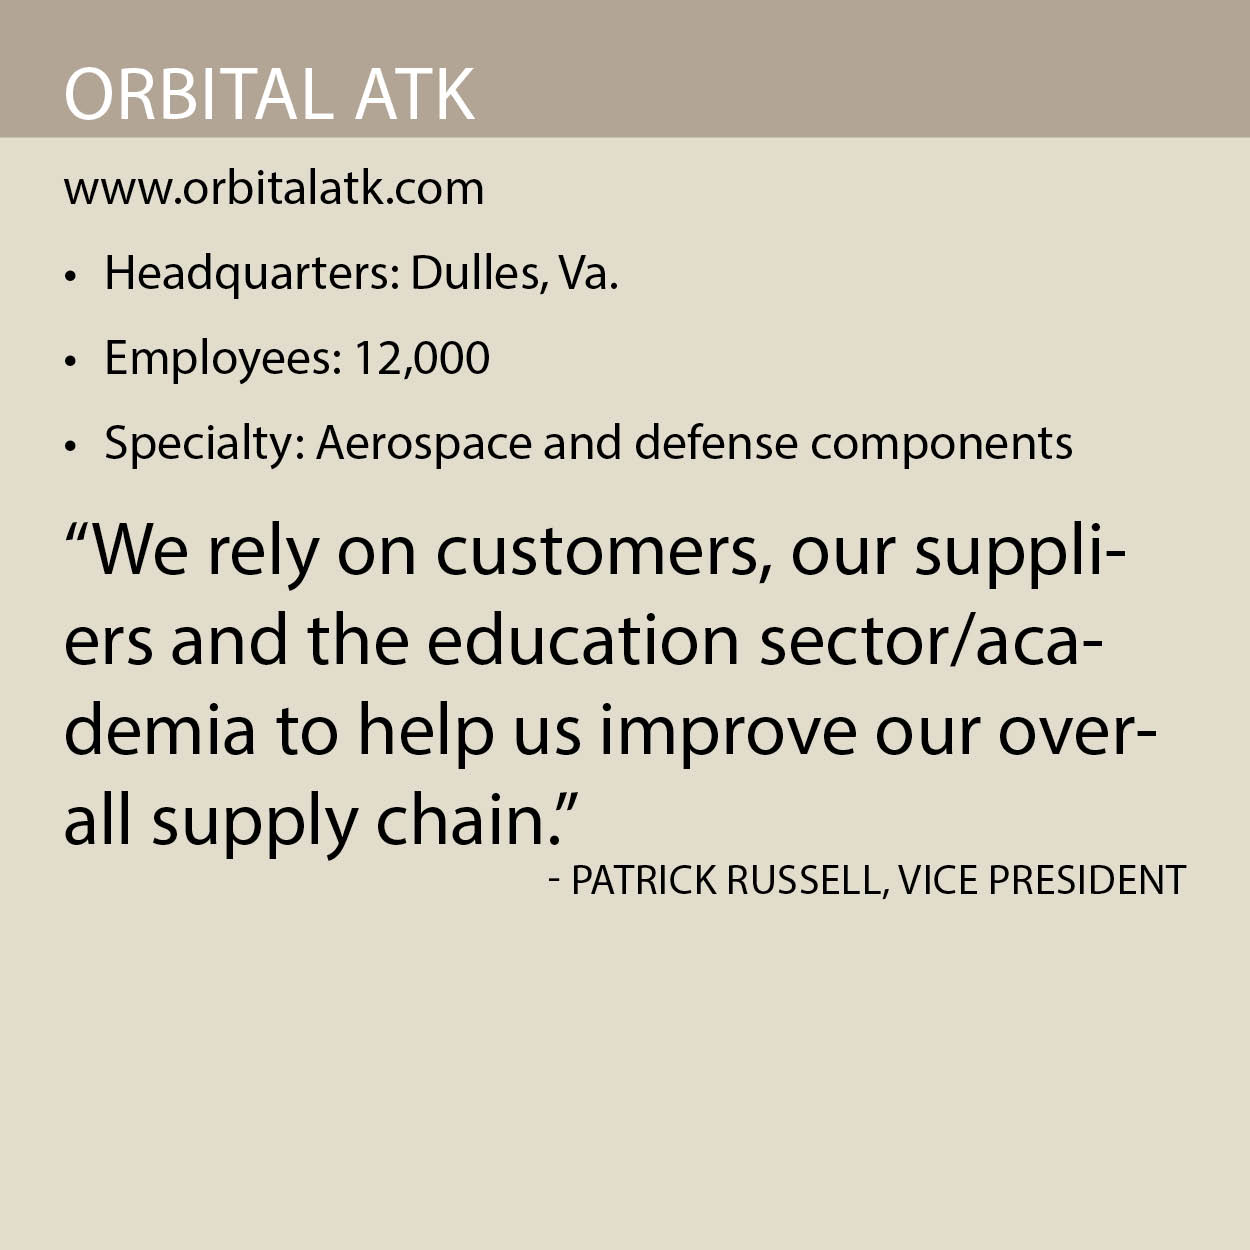 Orbital ATK fact box